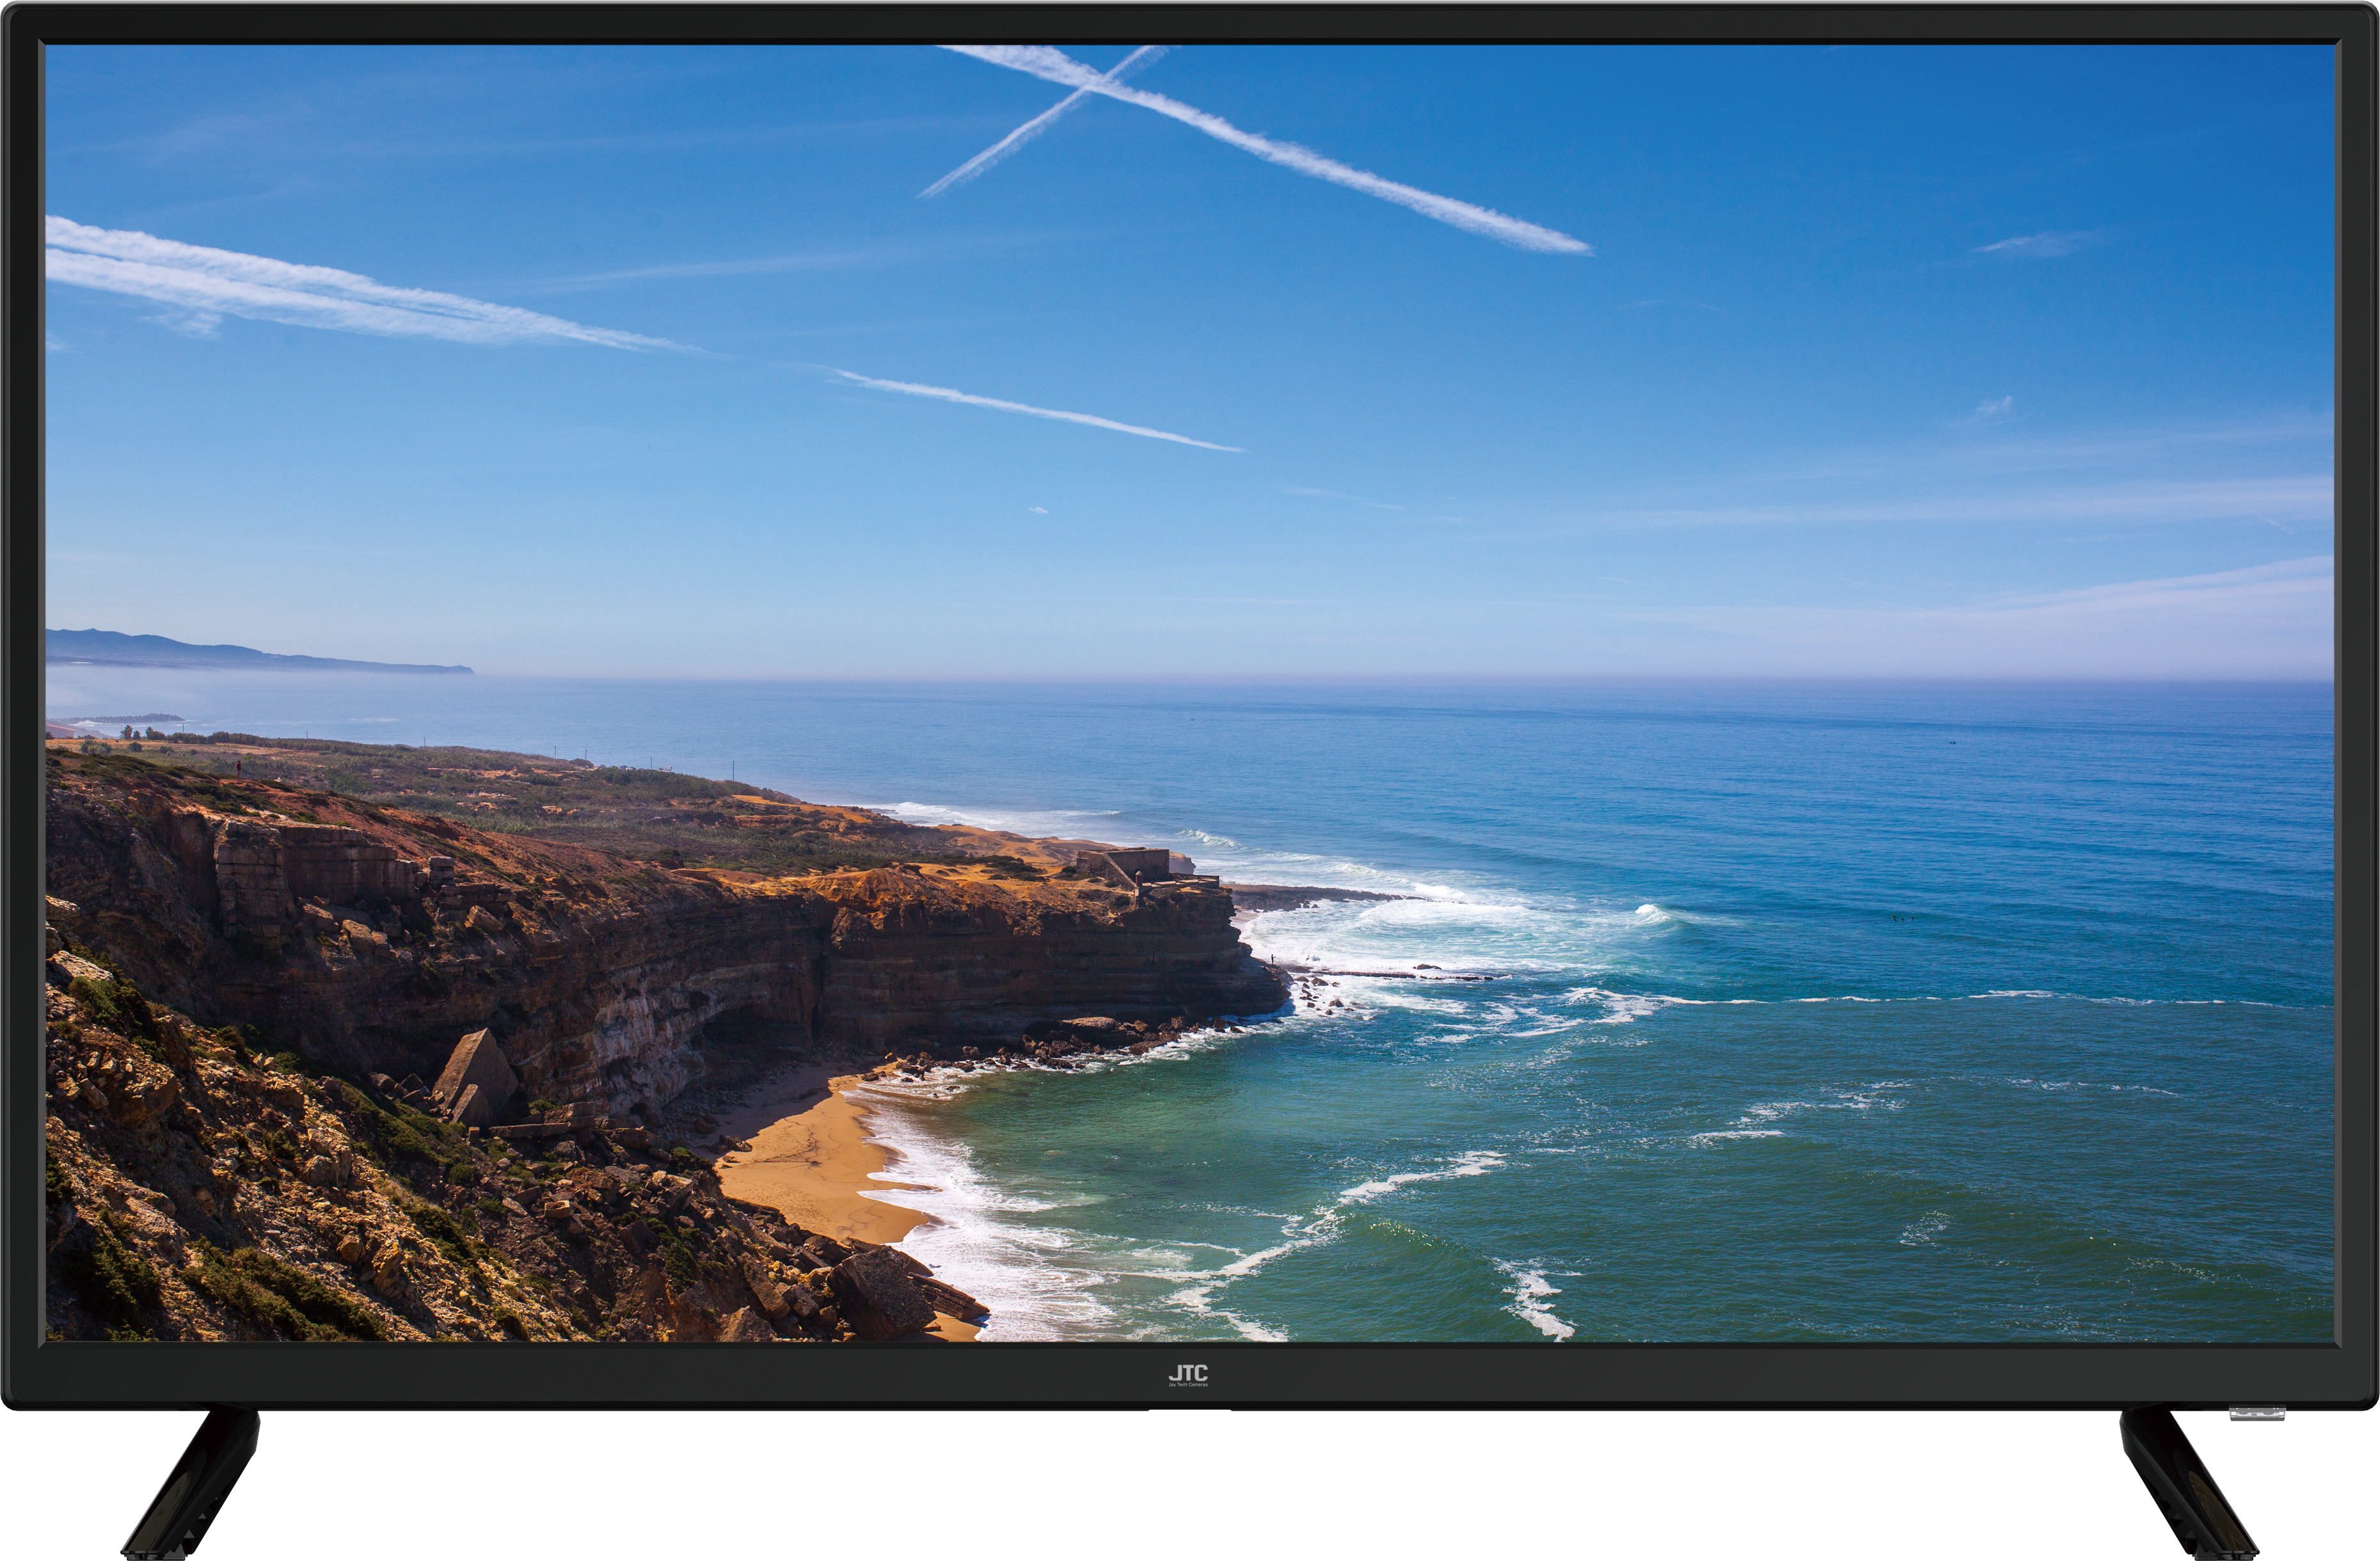 JTC / OS23250HSA LED TV 80 cm, 32 SMART Android) (Flat, Smart Zoll TV, TV HD, HD